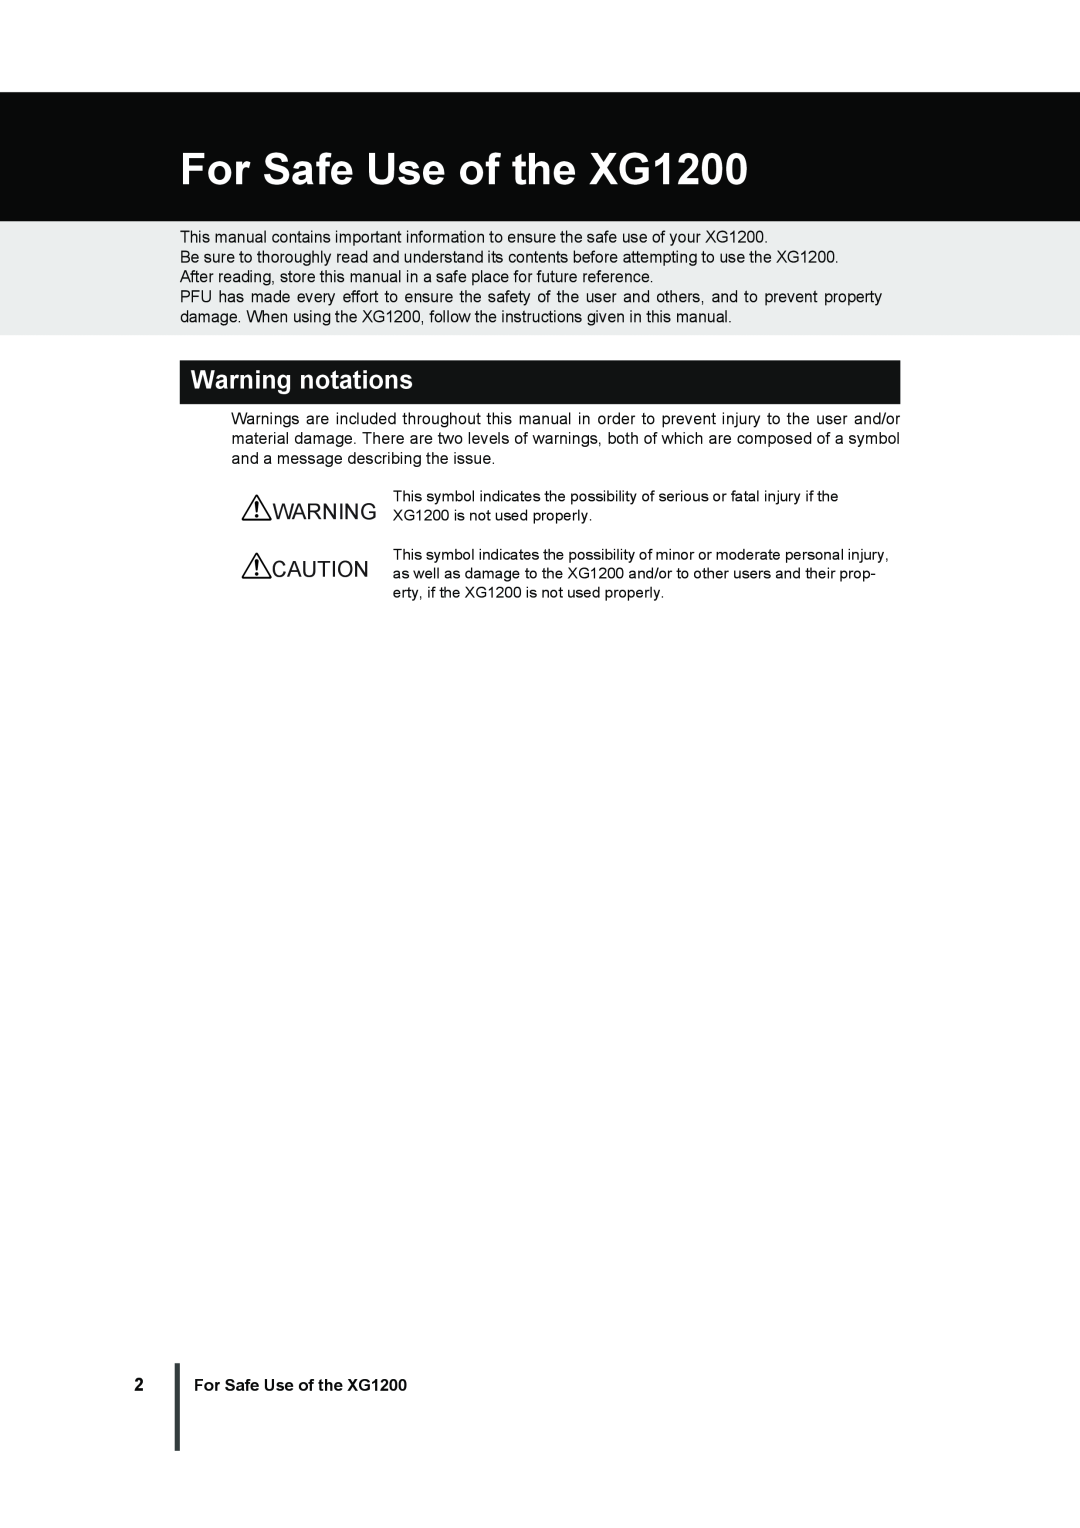 Fujitsu manual For Safe Use of the XG1200, Warning notations 